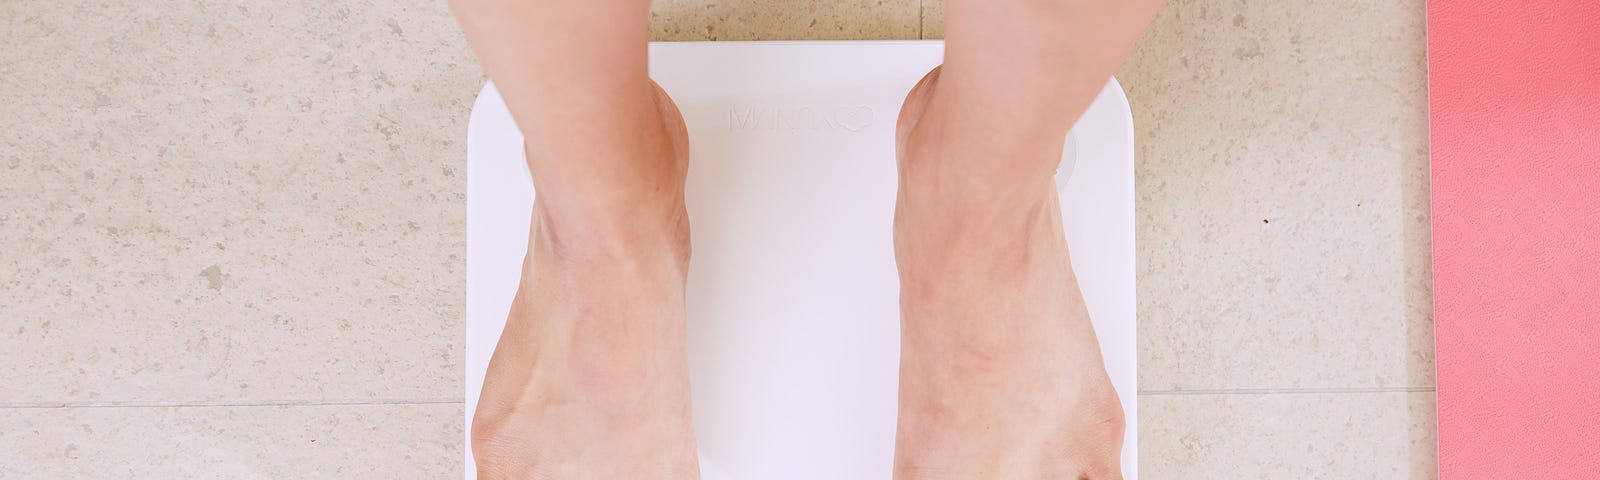 Bare feet on a bathroom scale